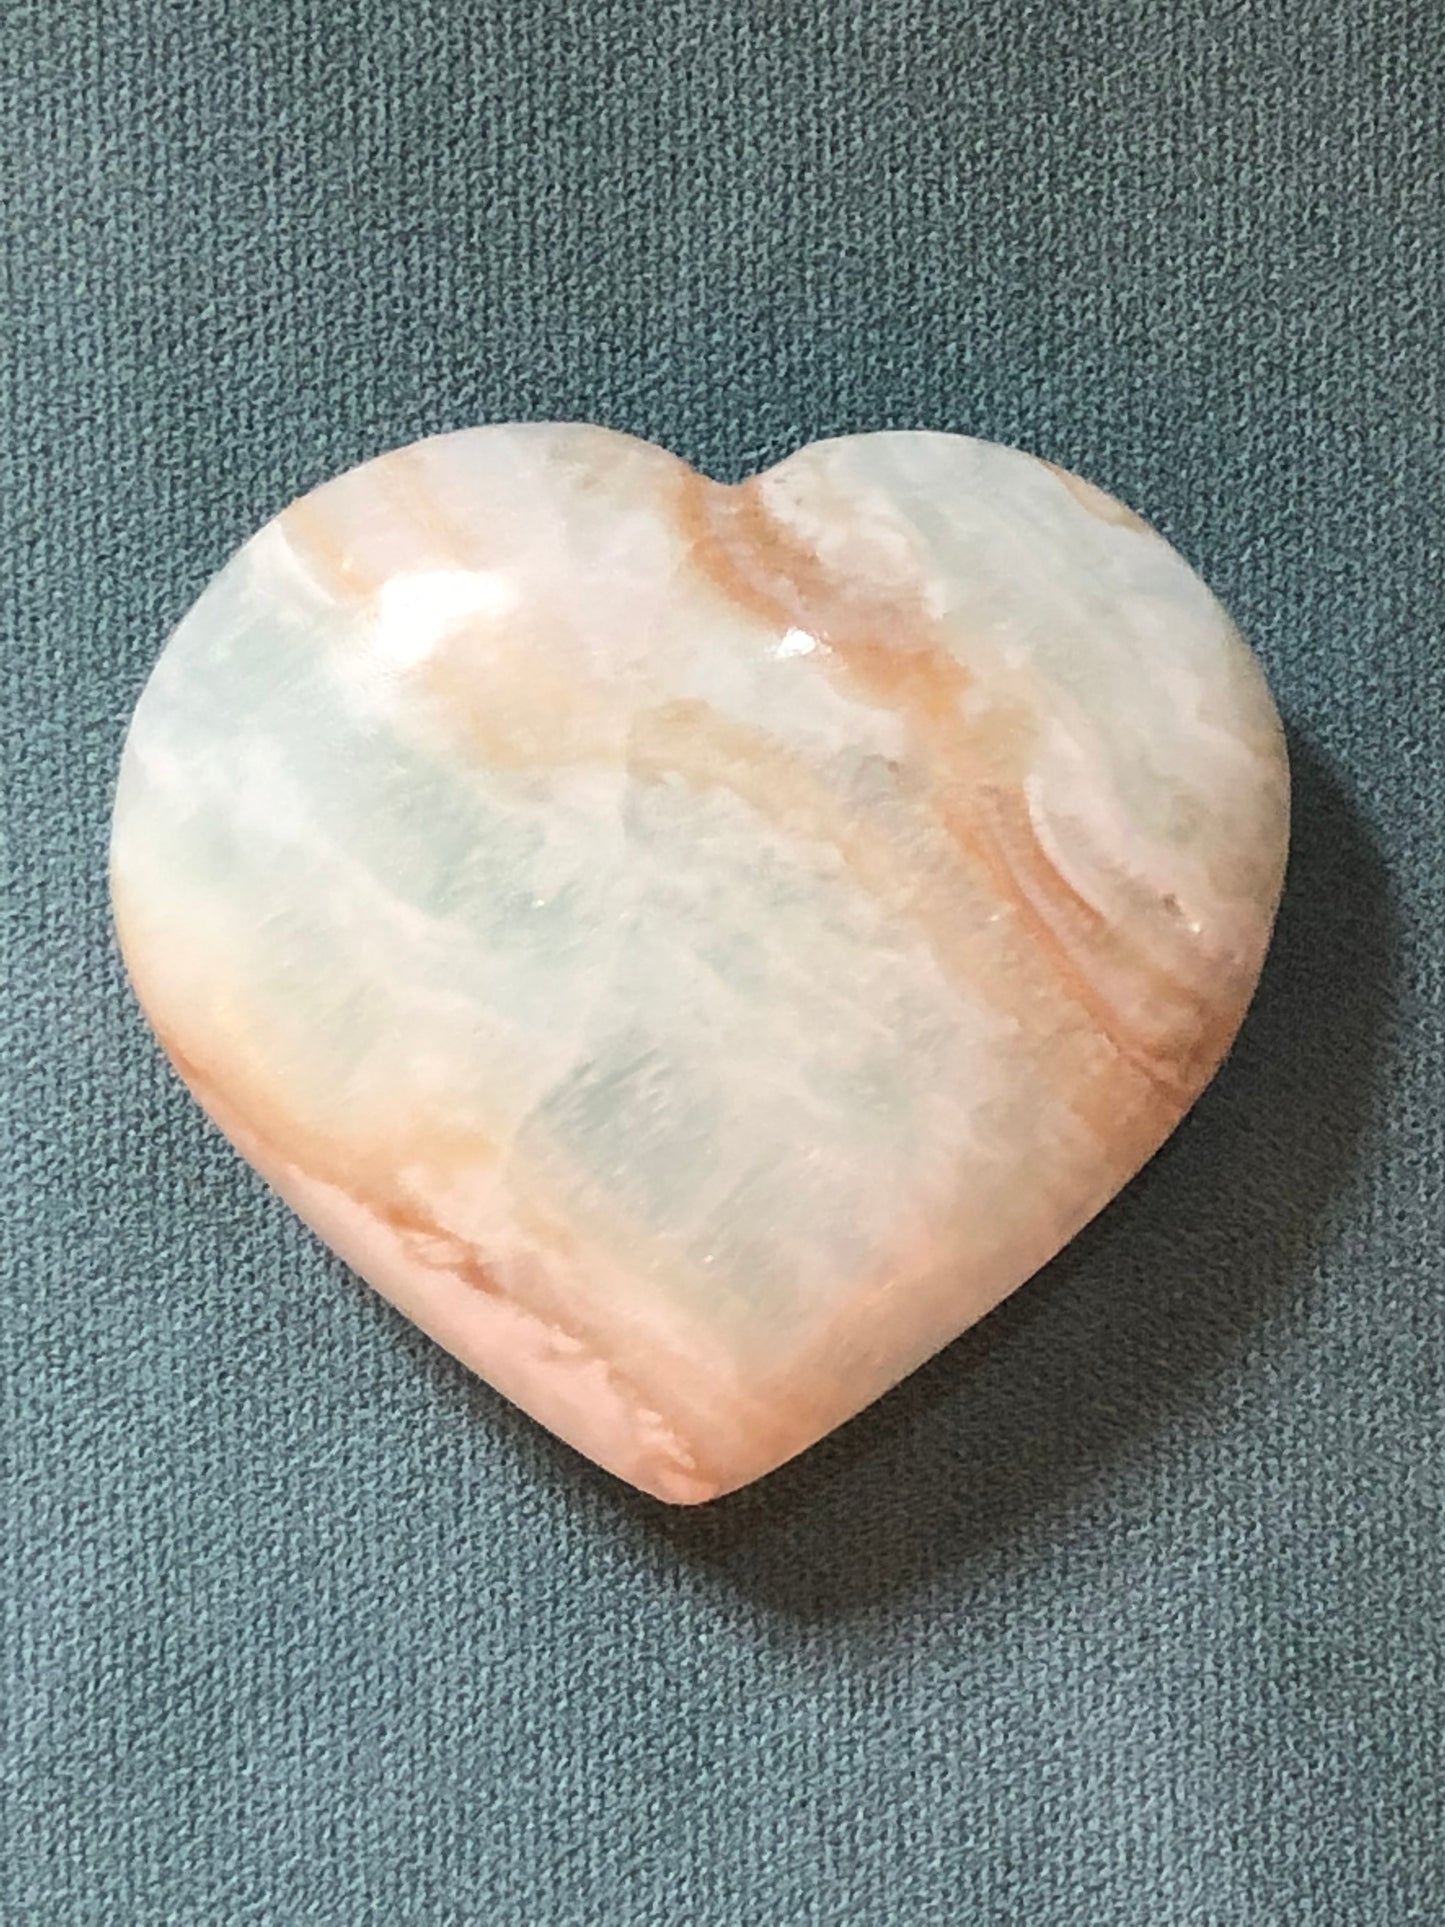 Medium sized Caribbean Calcite heart shaped palm stone.